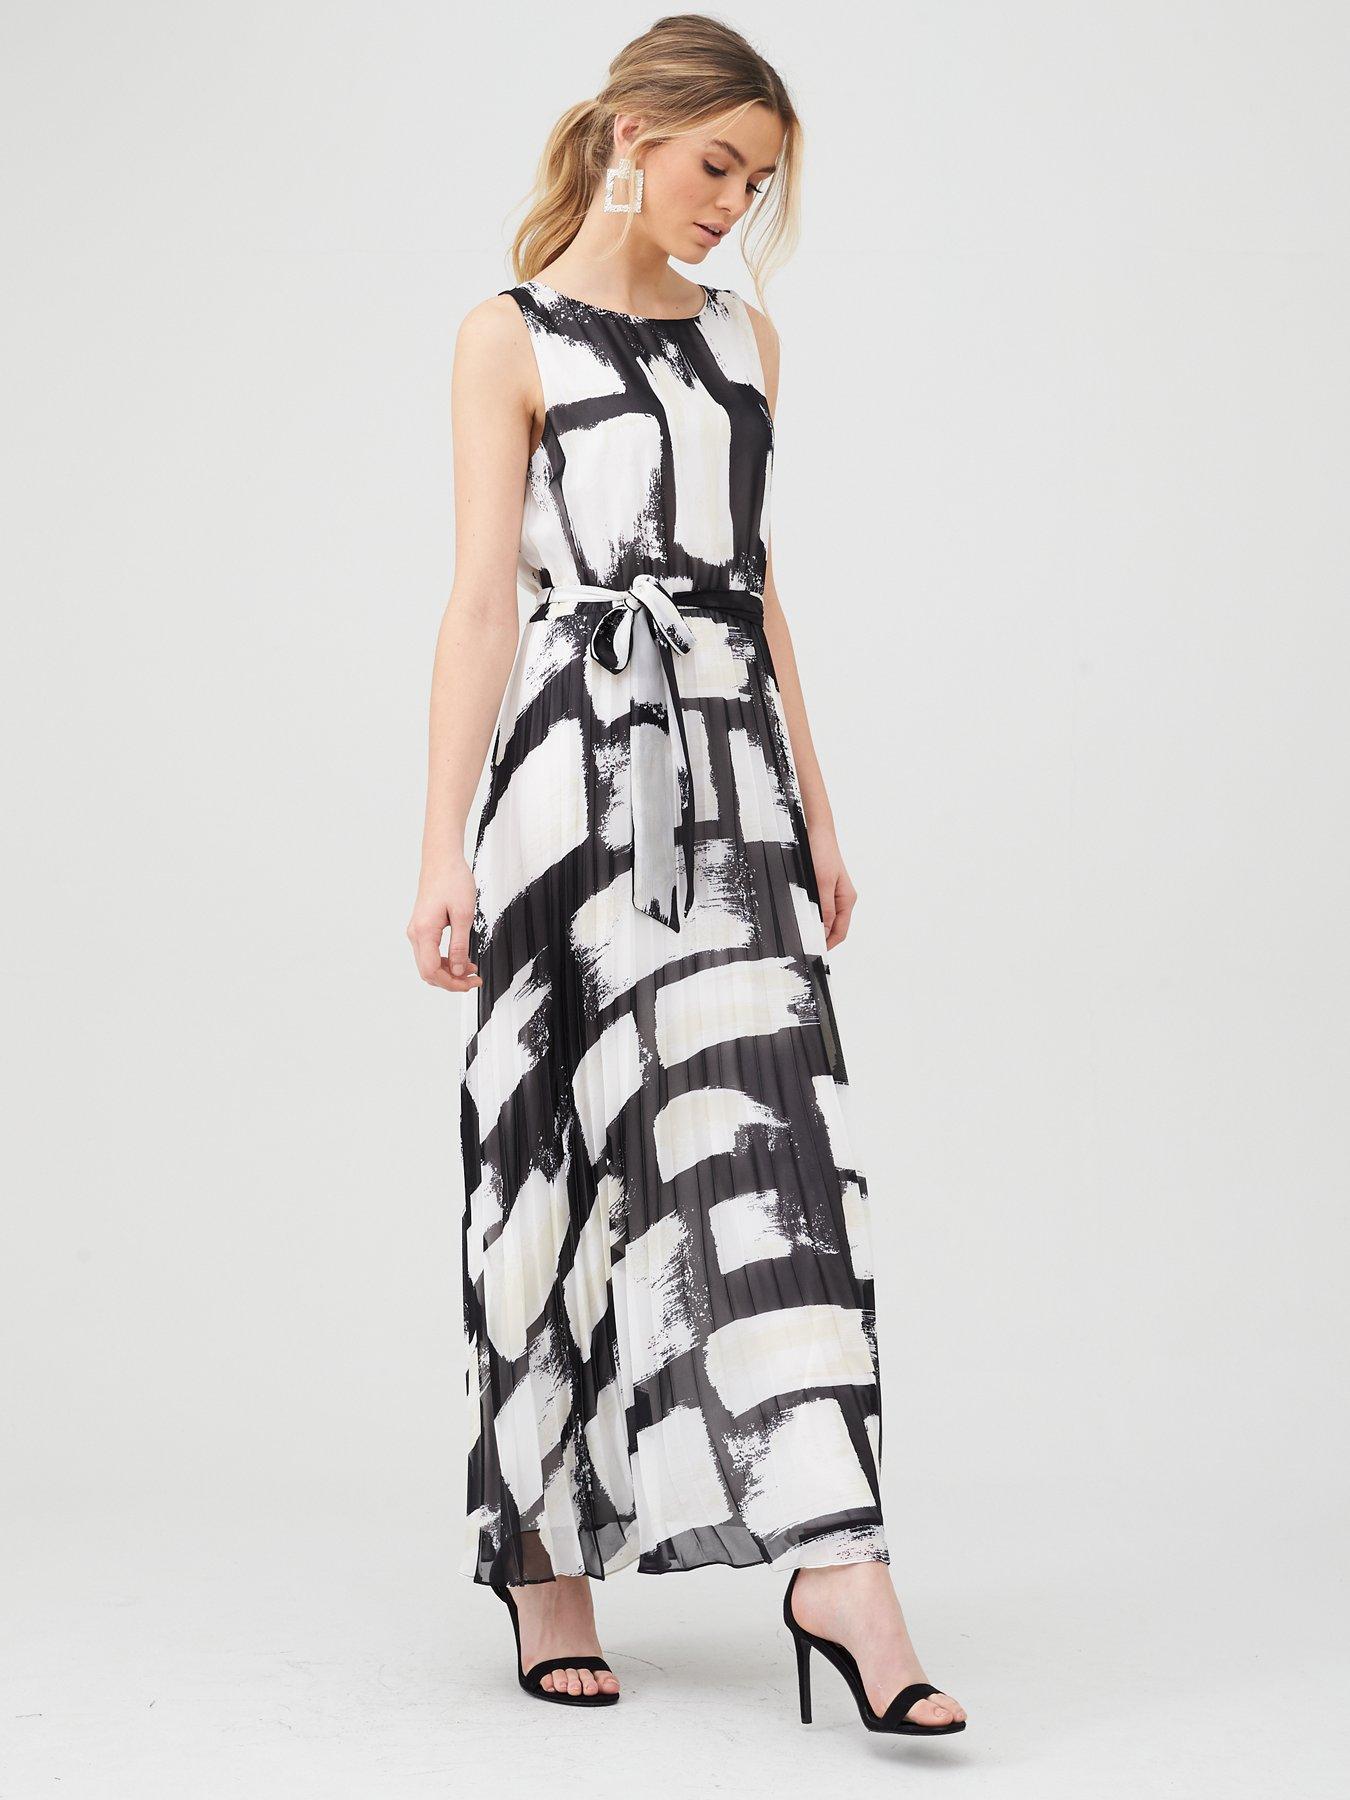 black and white dress wallis